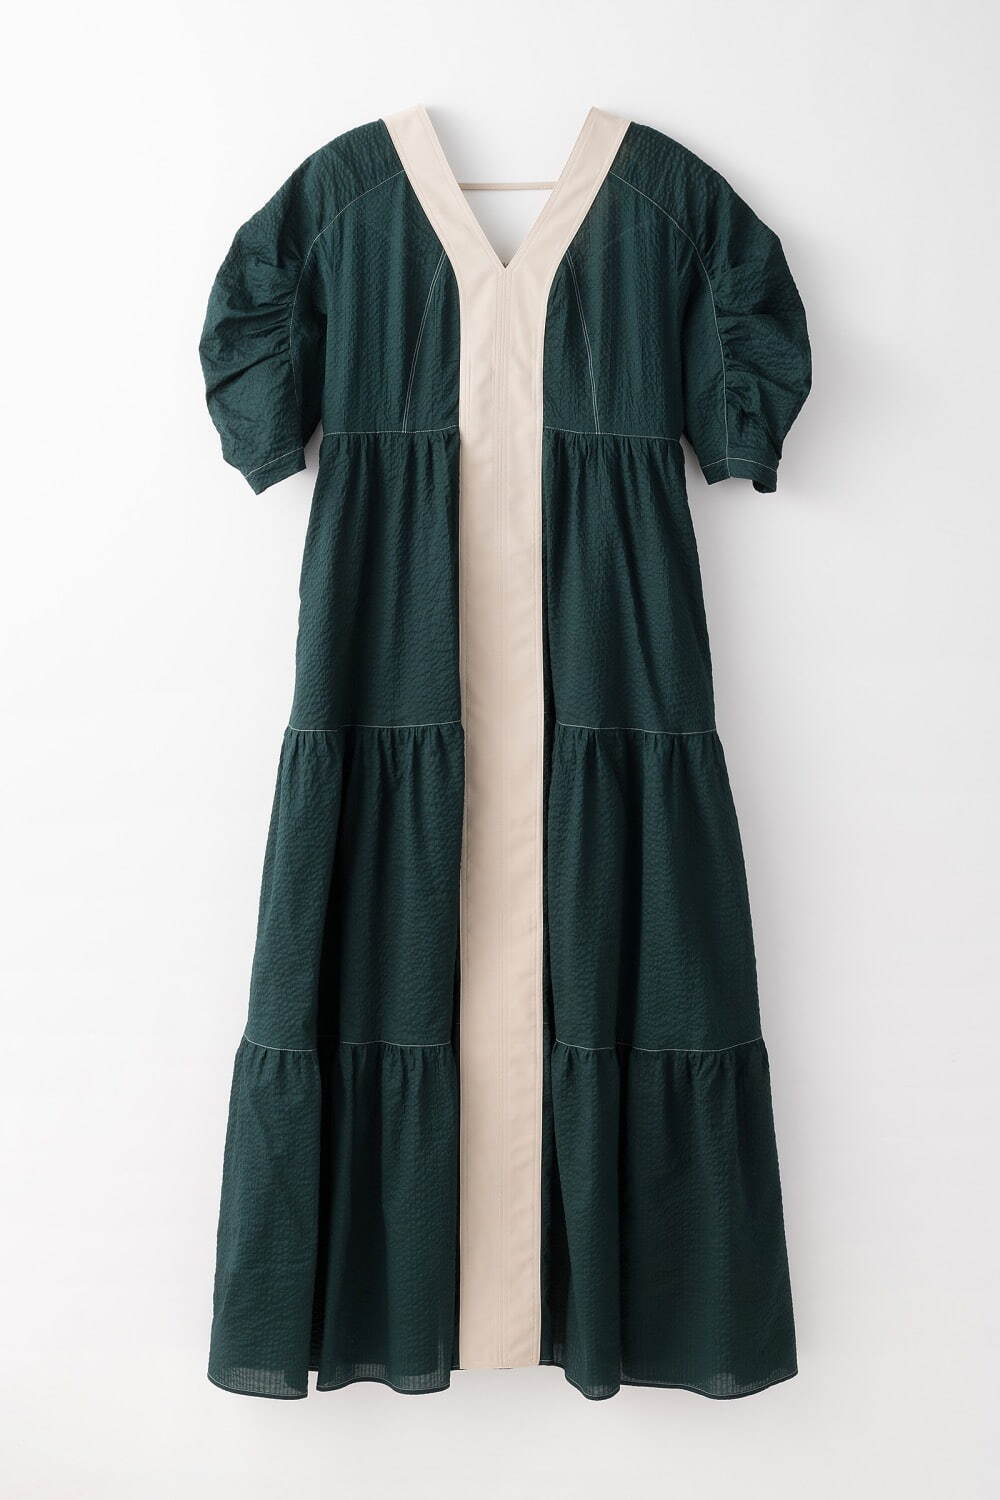 Wave cotton tiered dress 41,800円